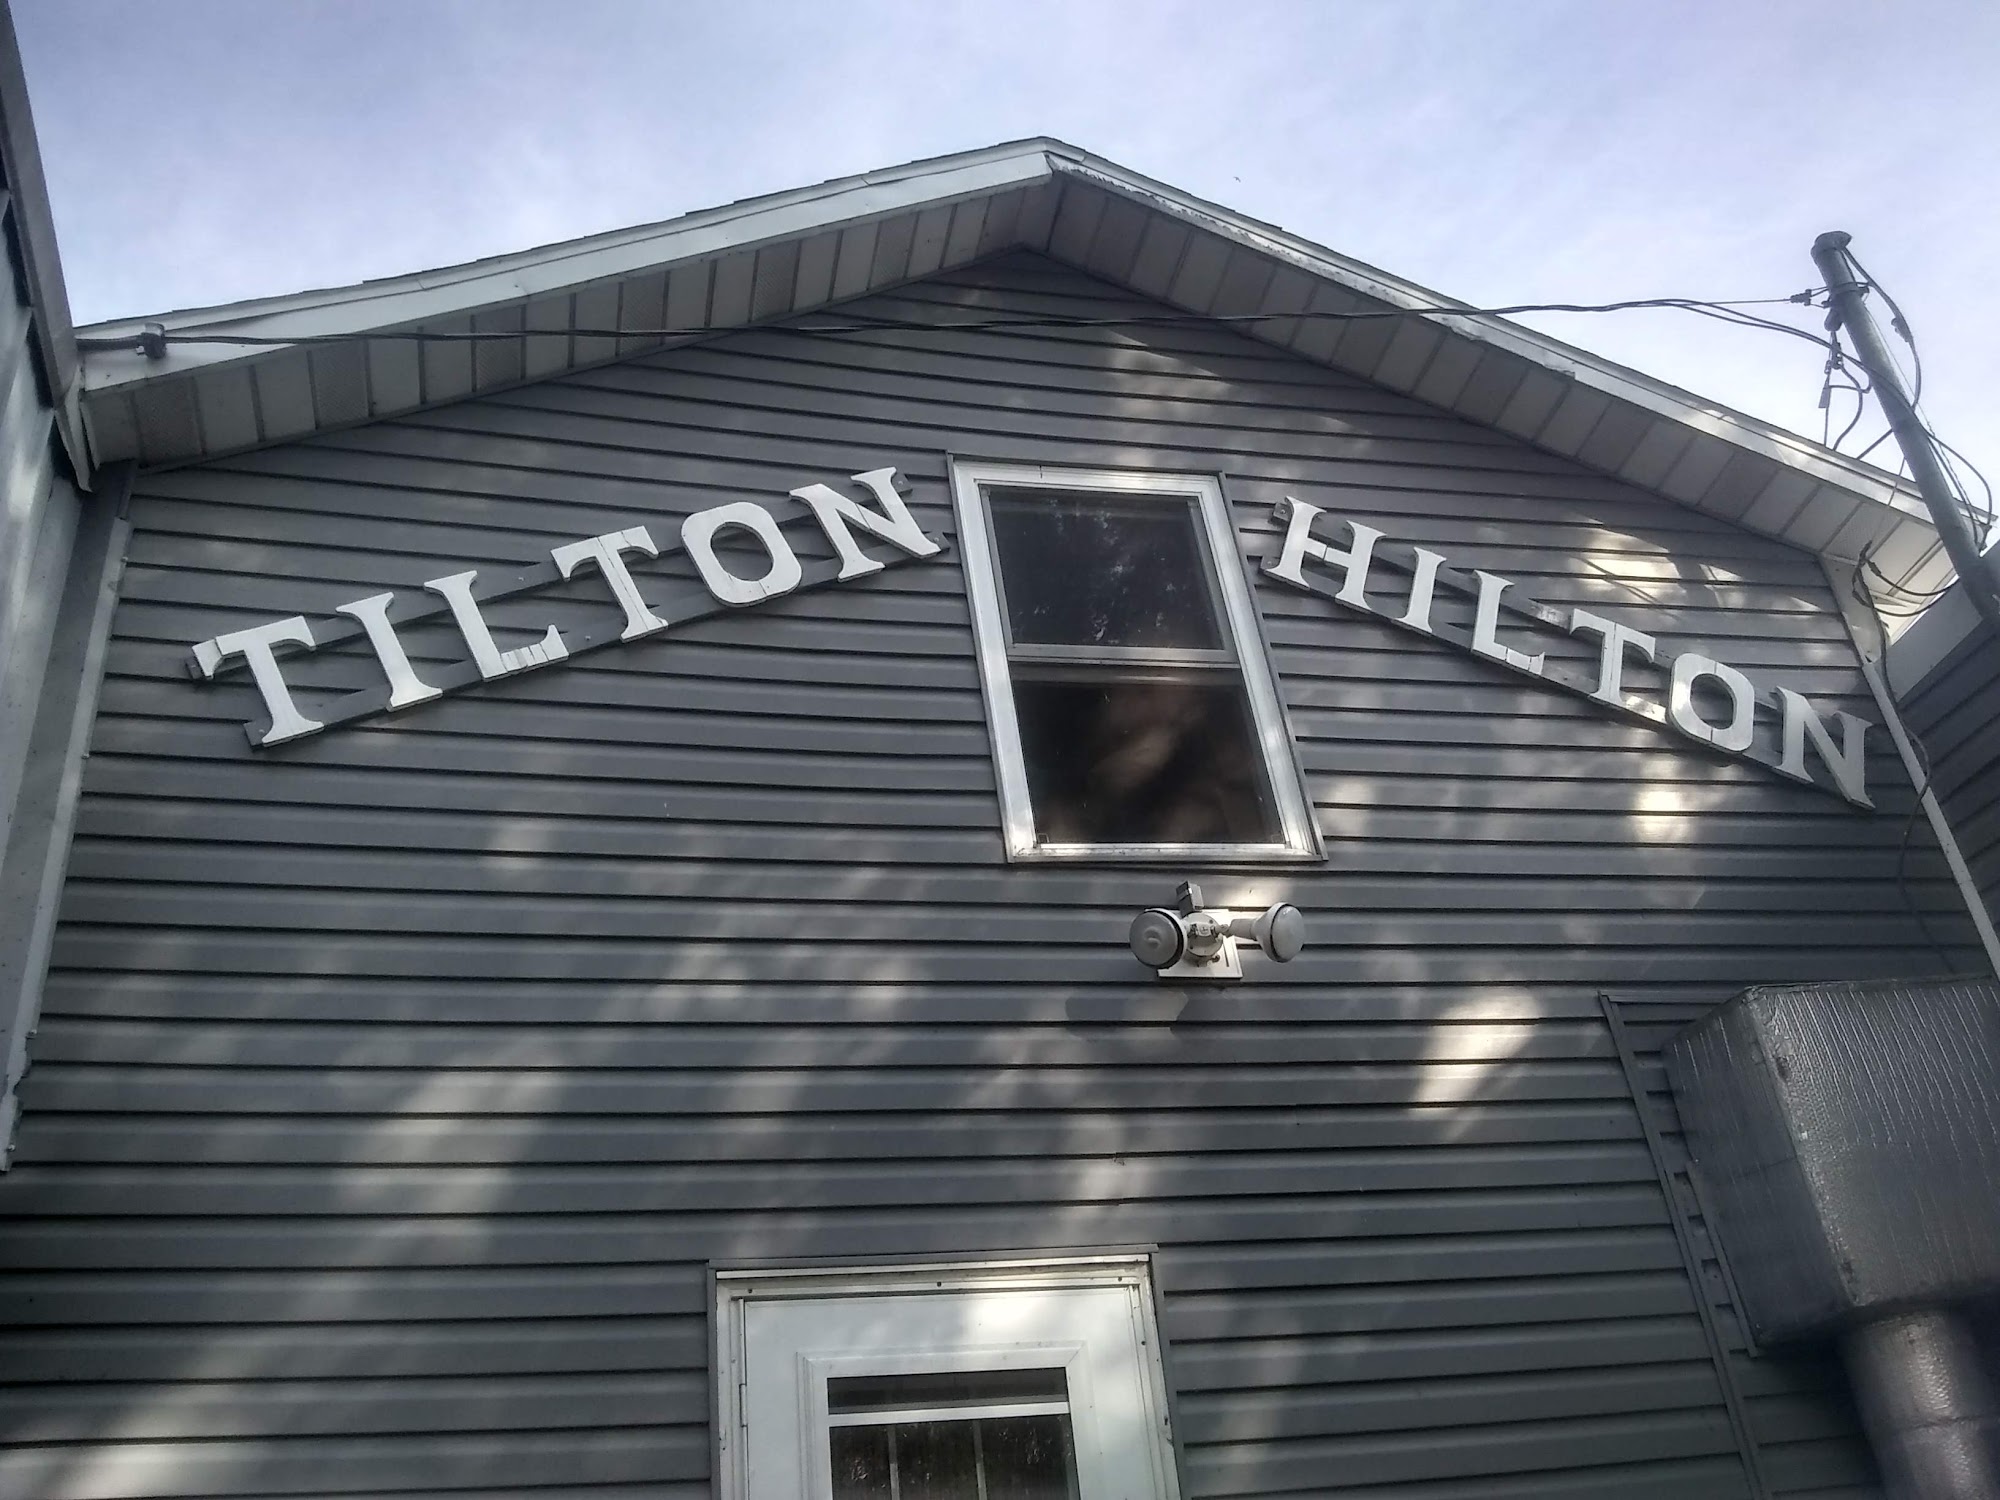 Tilton Hilton